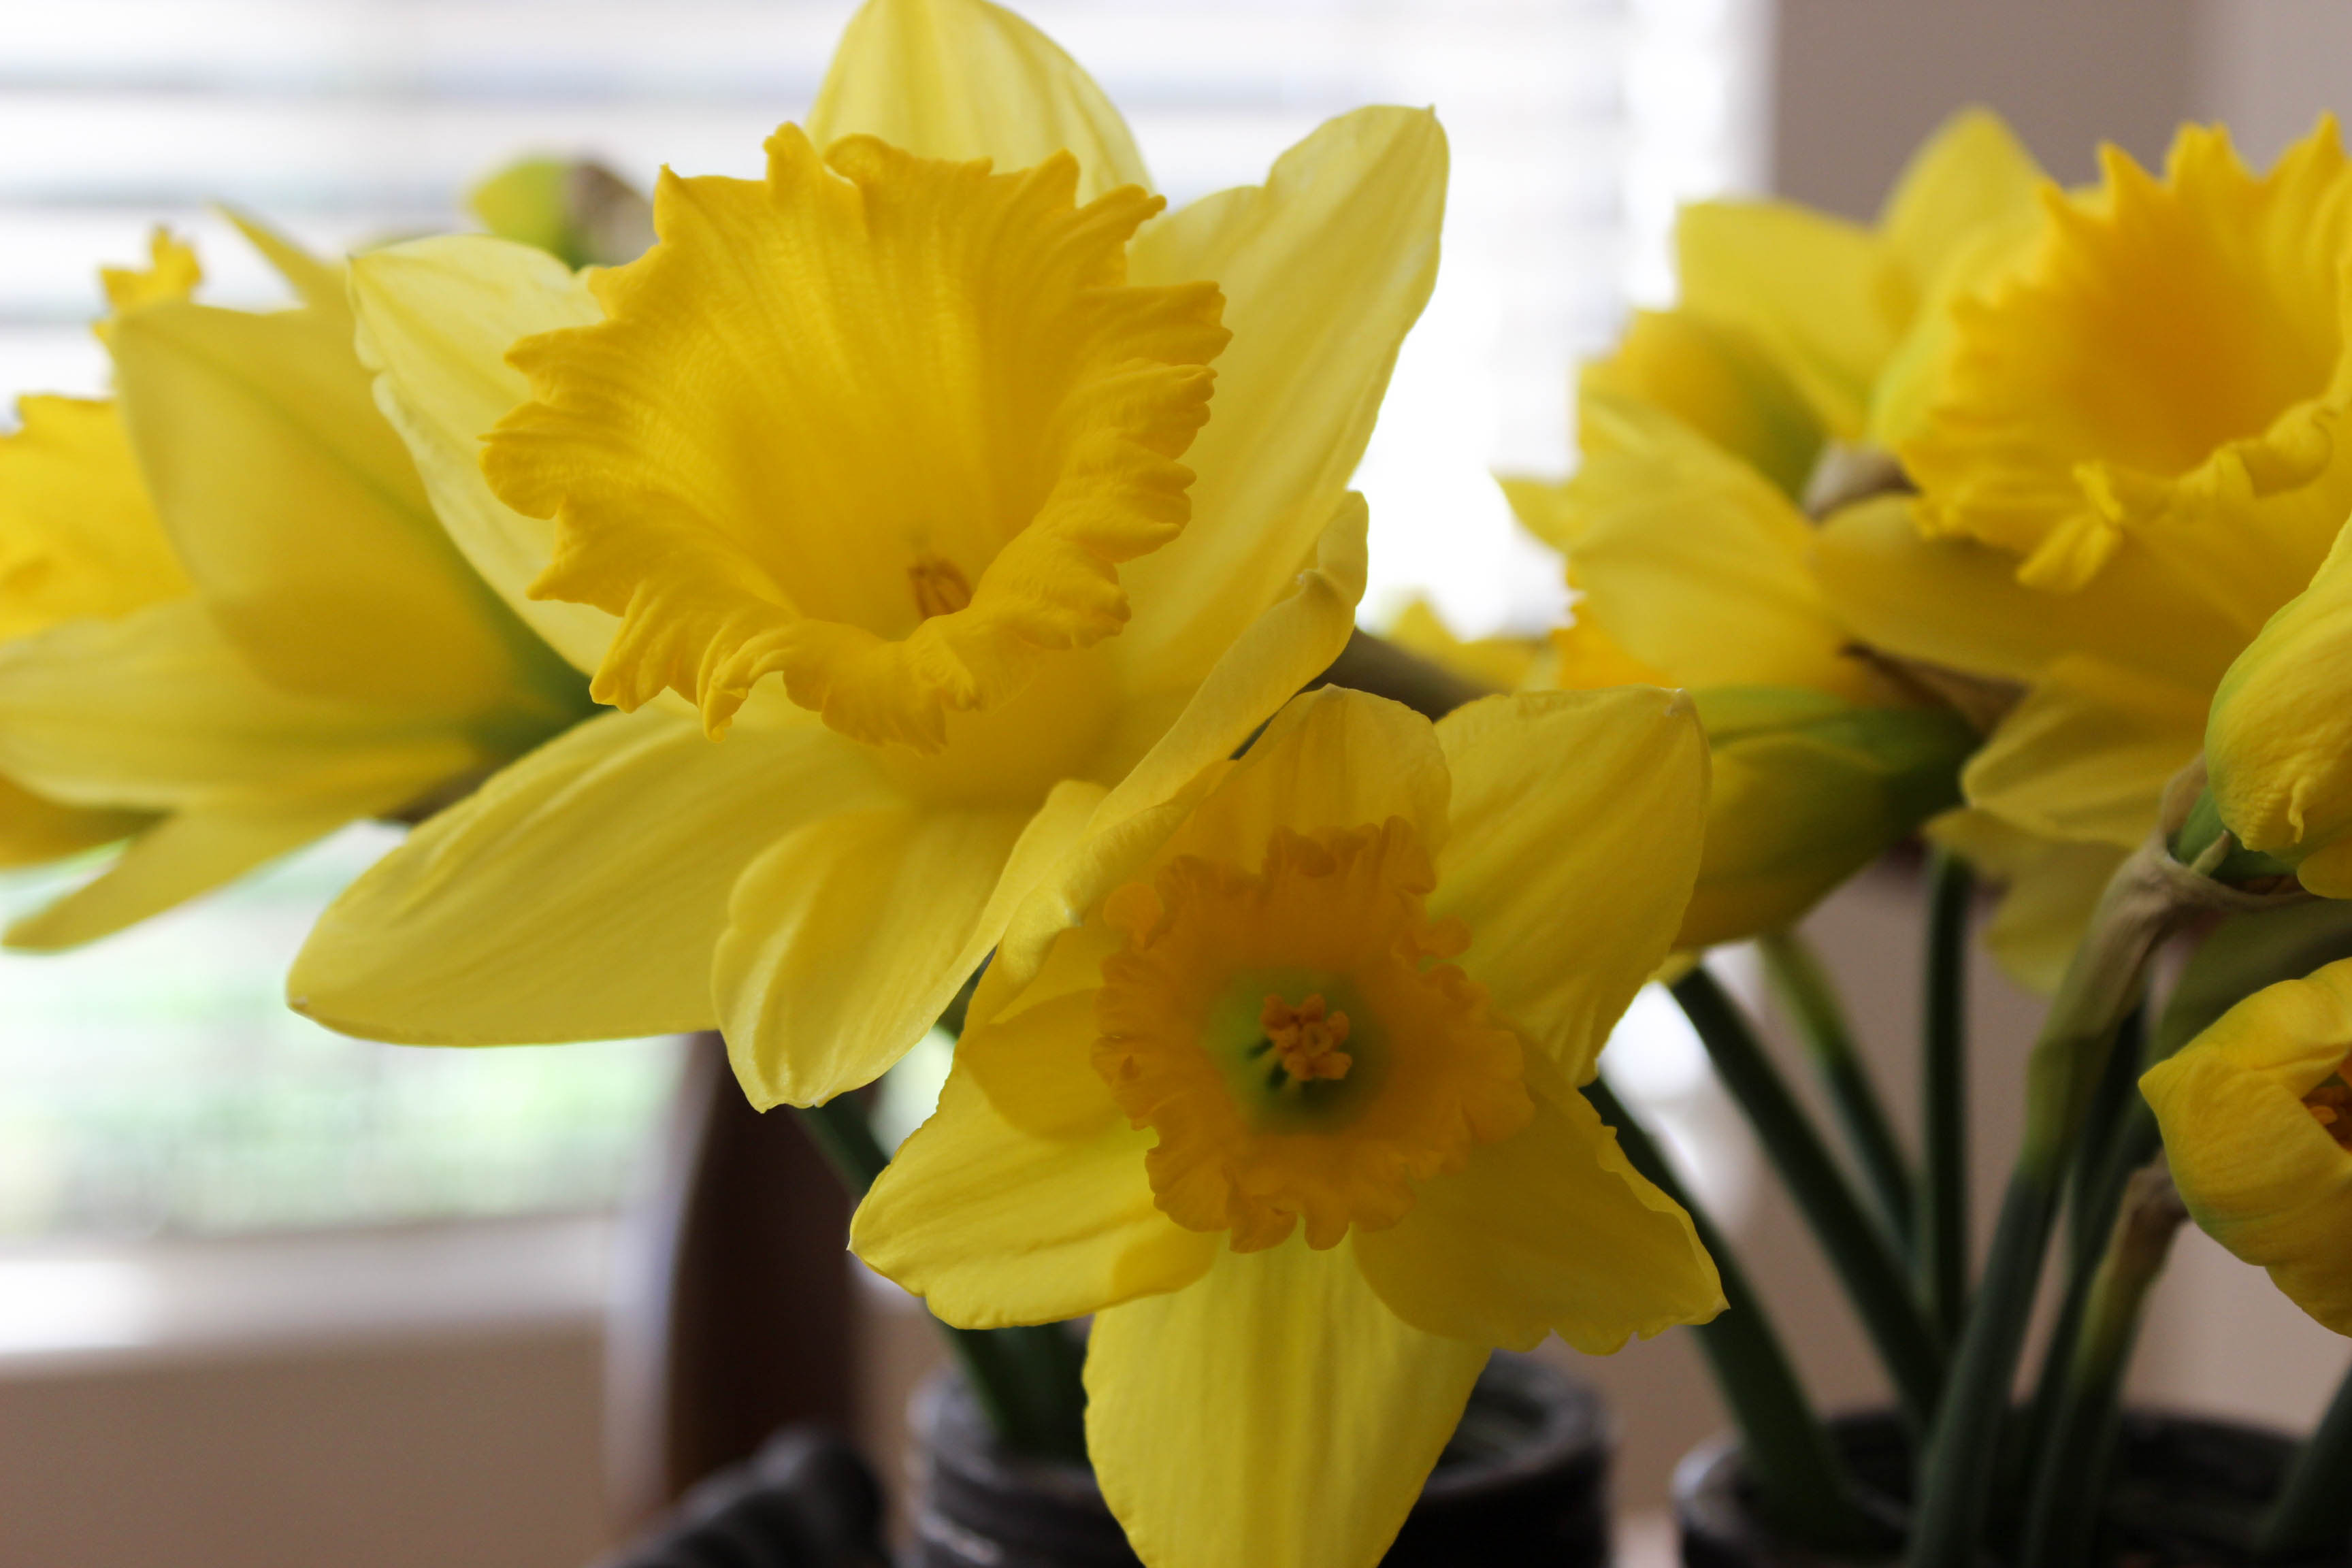 Trader Joes' daffodils make me happy